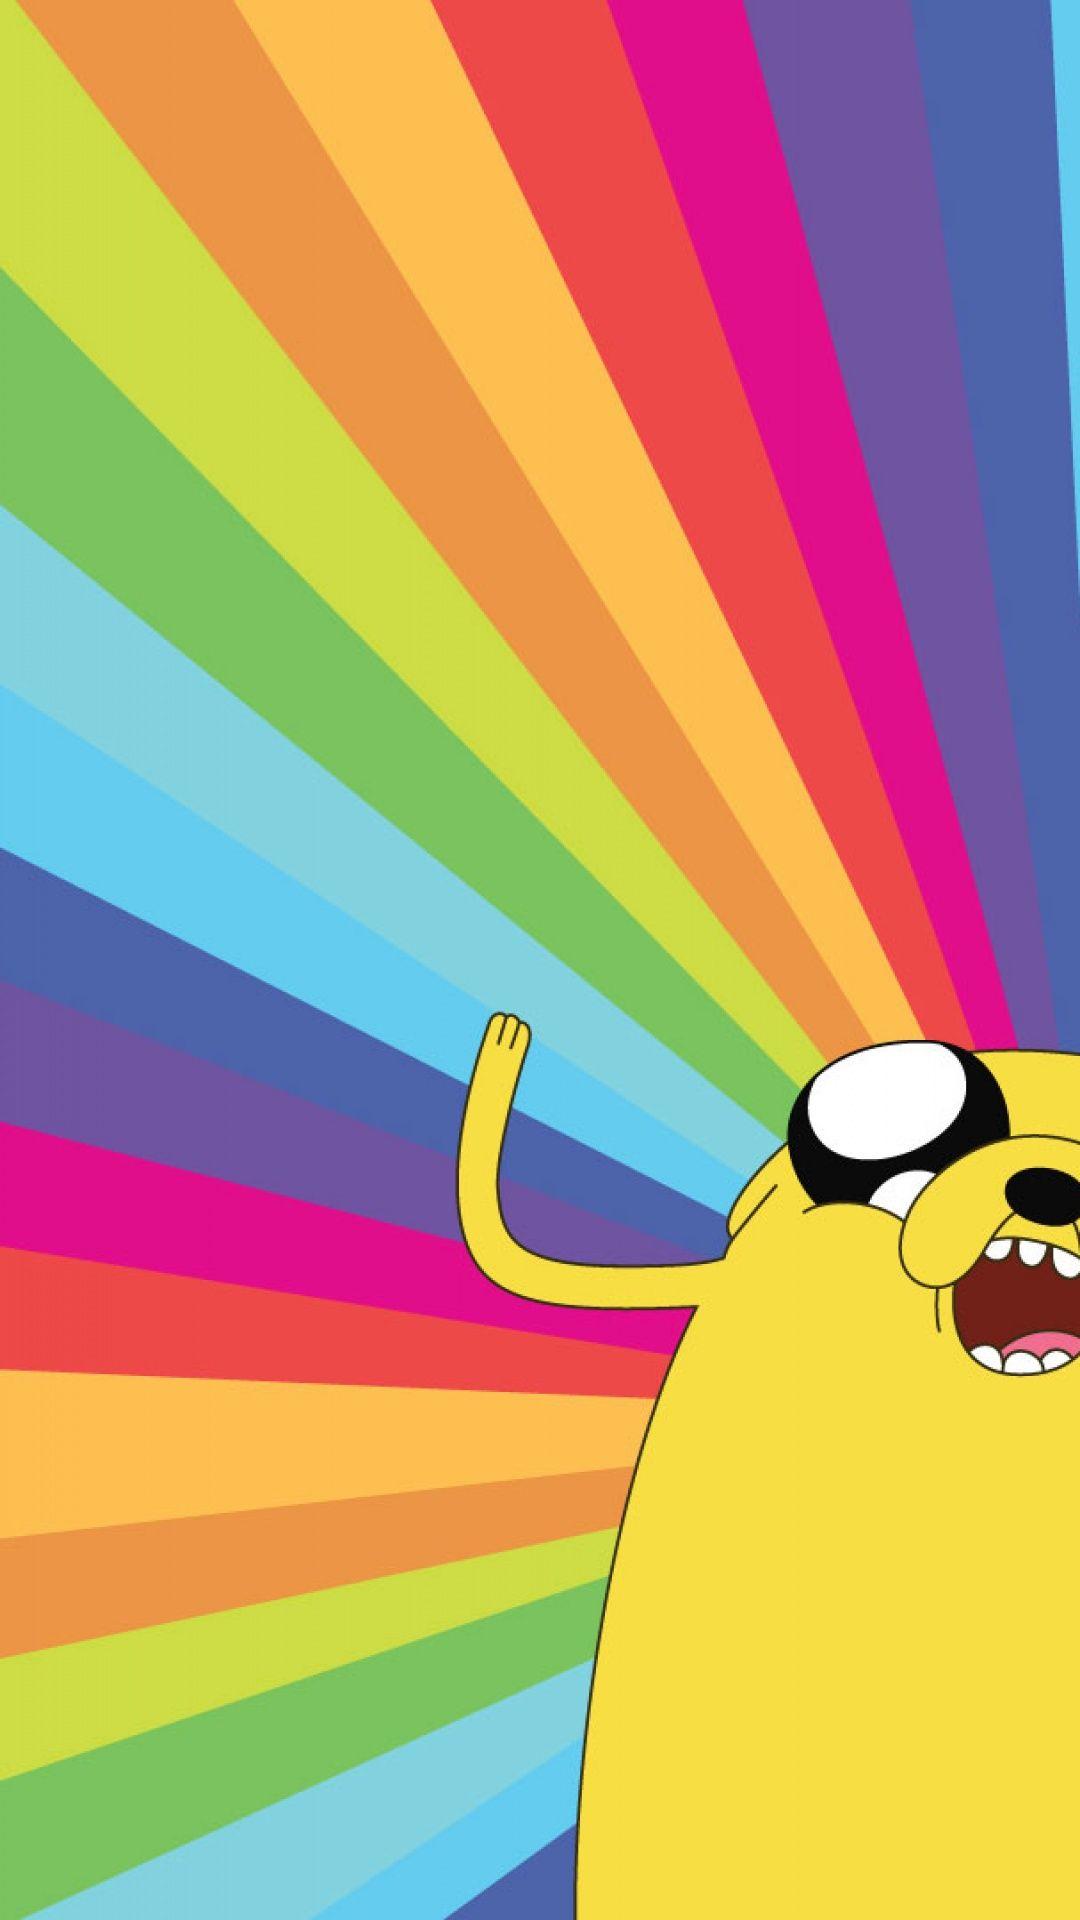 Jake Adventure Time iPhone Wallpaper